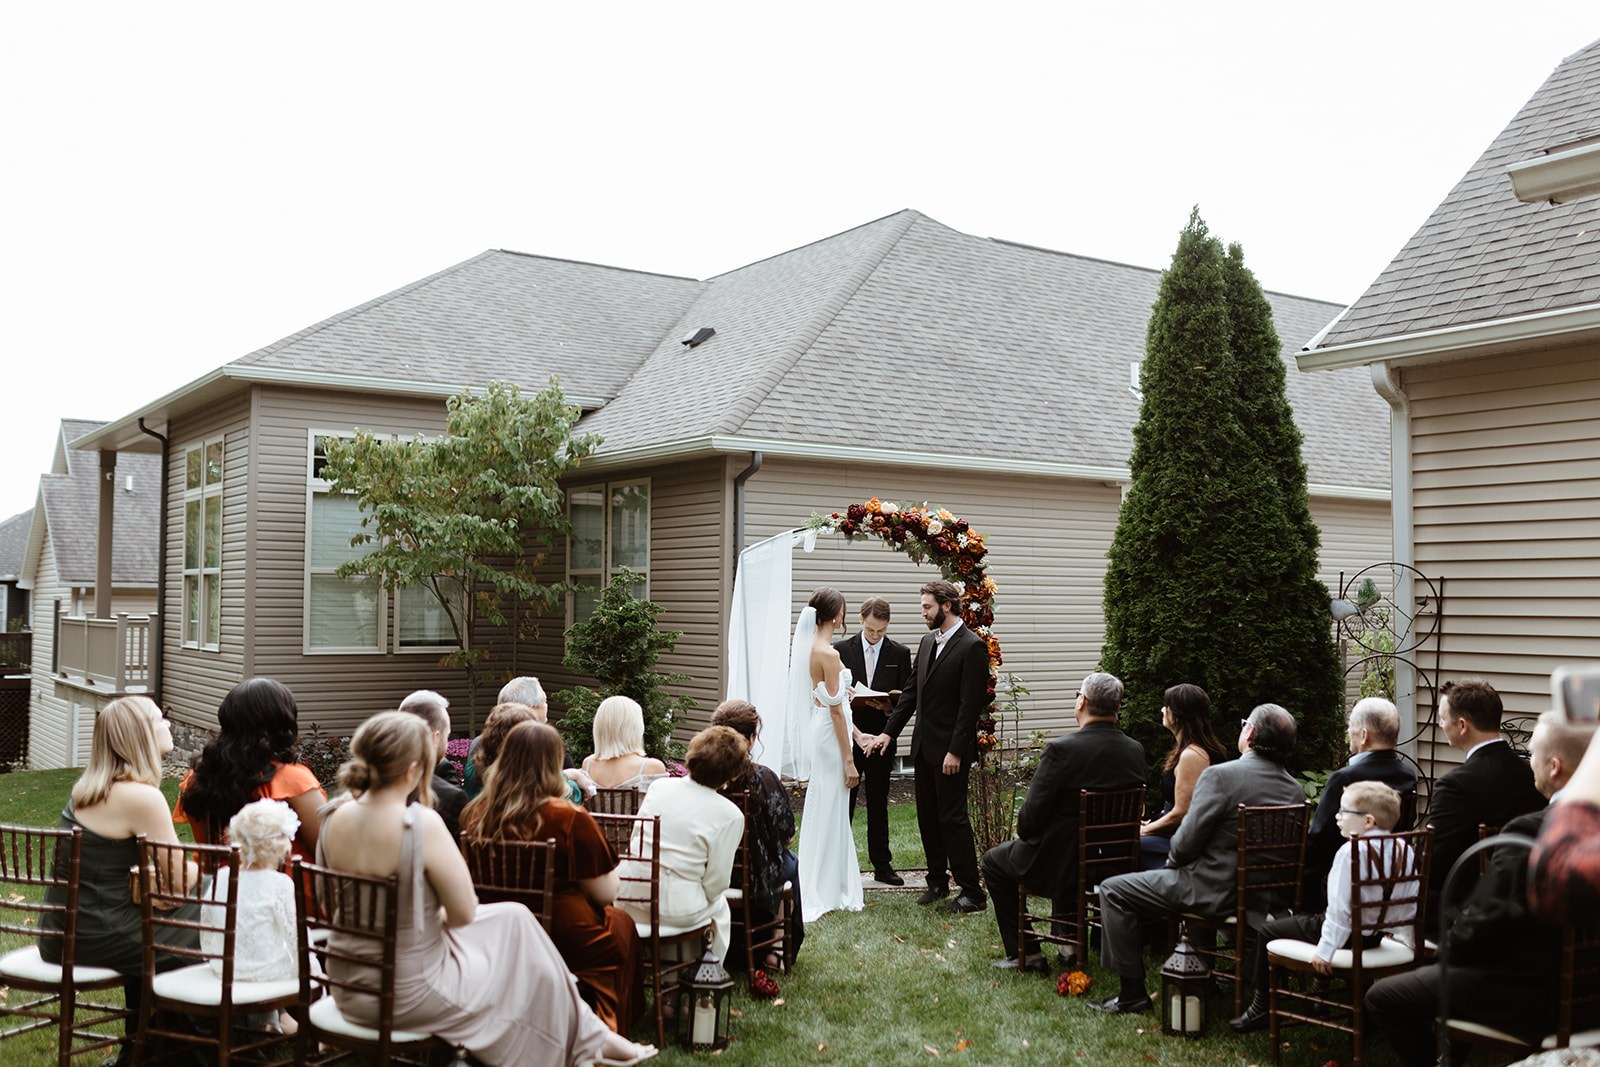 A bride and groom say "I do" in Arlington, Virginia